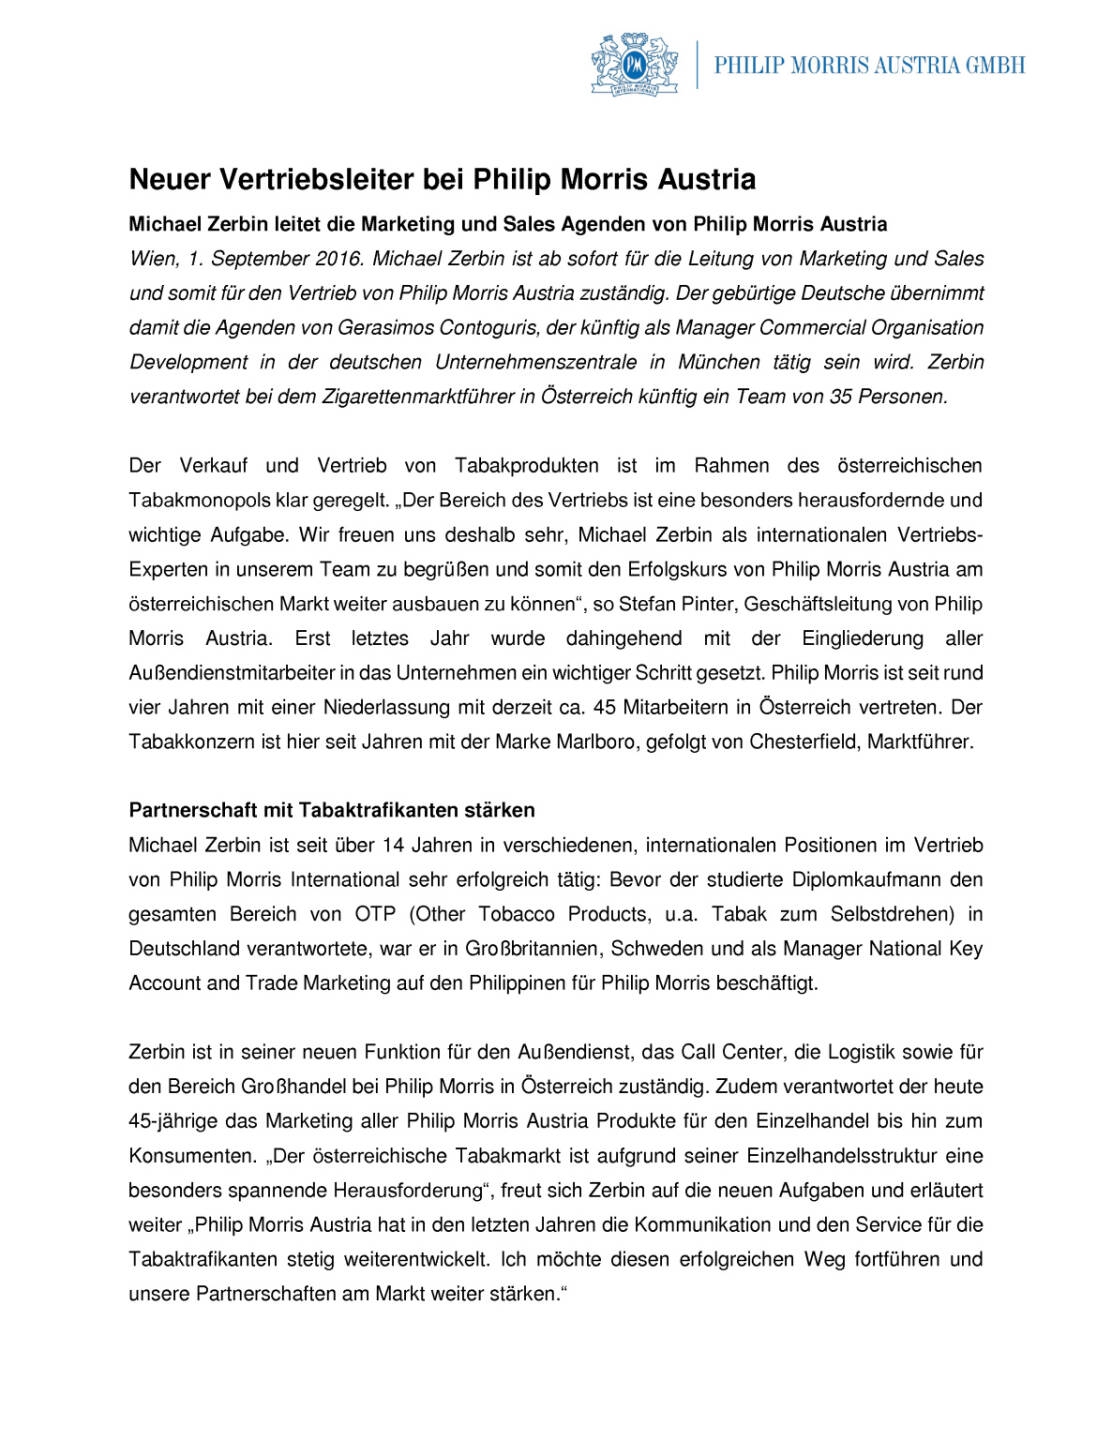 Philip Morris Austria: Michael Zerbin ist neuer Vertriebsleiter, Seite 1/2, komplettes Dokument unter http://boerse-social.com/static/uploads/file_1703_philip_morris_austria_michael_zerbin_ist_neuer_vertriebsleiter.pdf